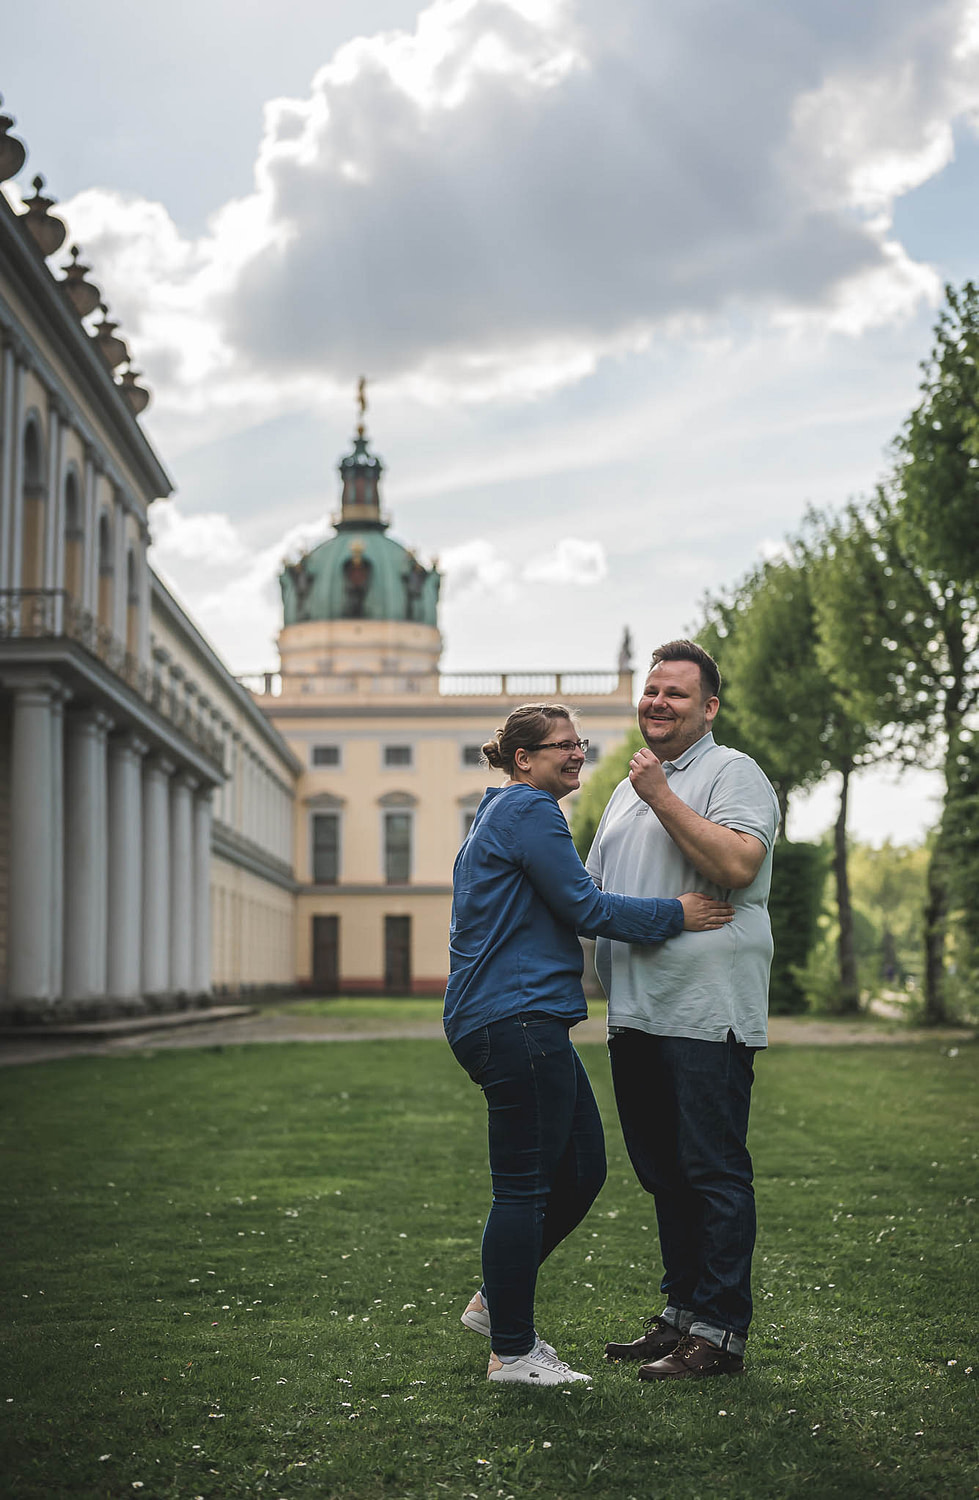 Verlobungsshooting Berlin - Paarshooting – Schloss Charlottenburg Berlin -Hochzeitsfotograf Berlin - Hochzeitsfotograf Brandenburg - Hochzeitsreportage Berlin